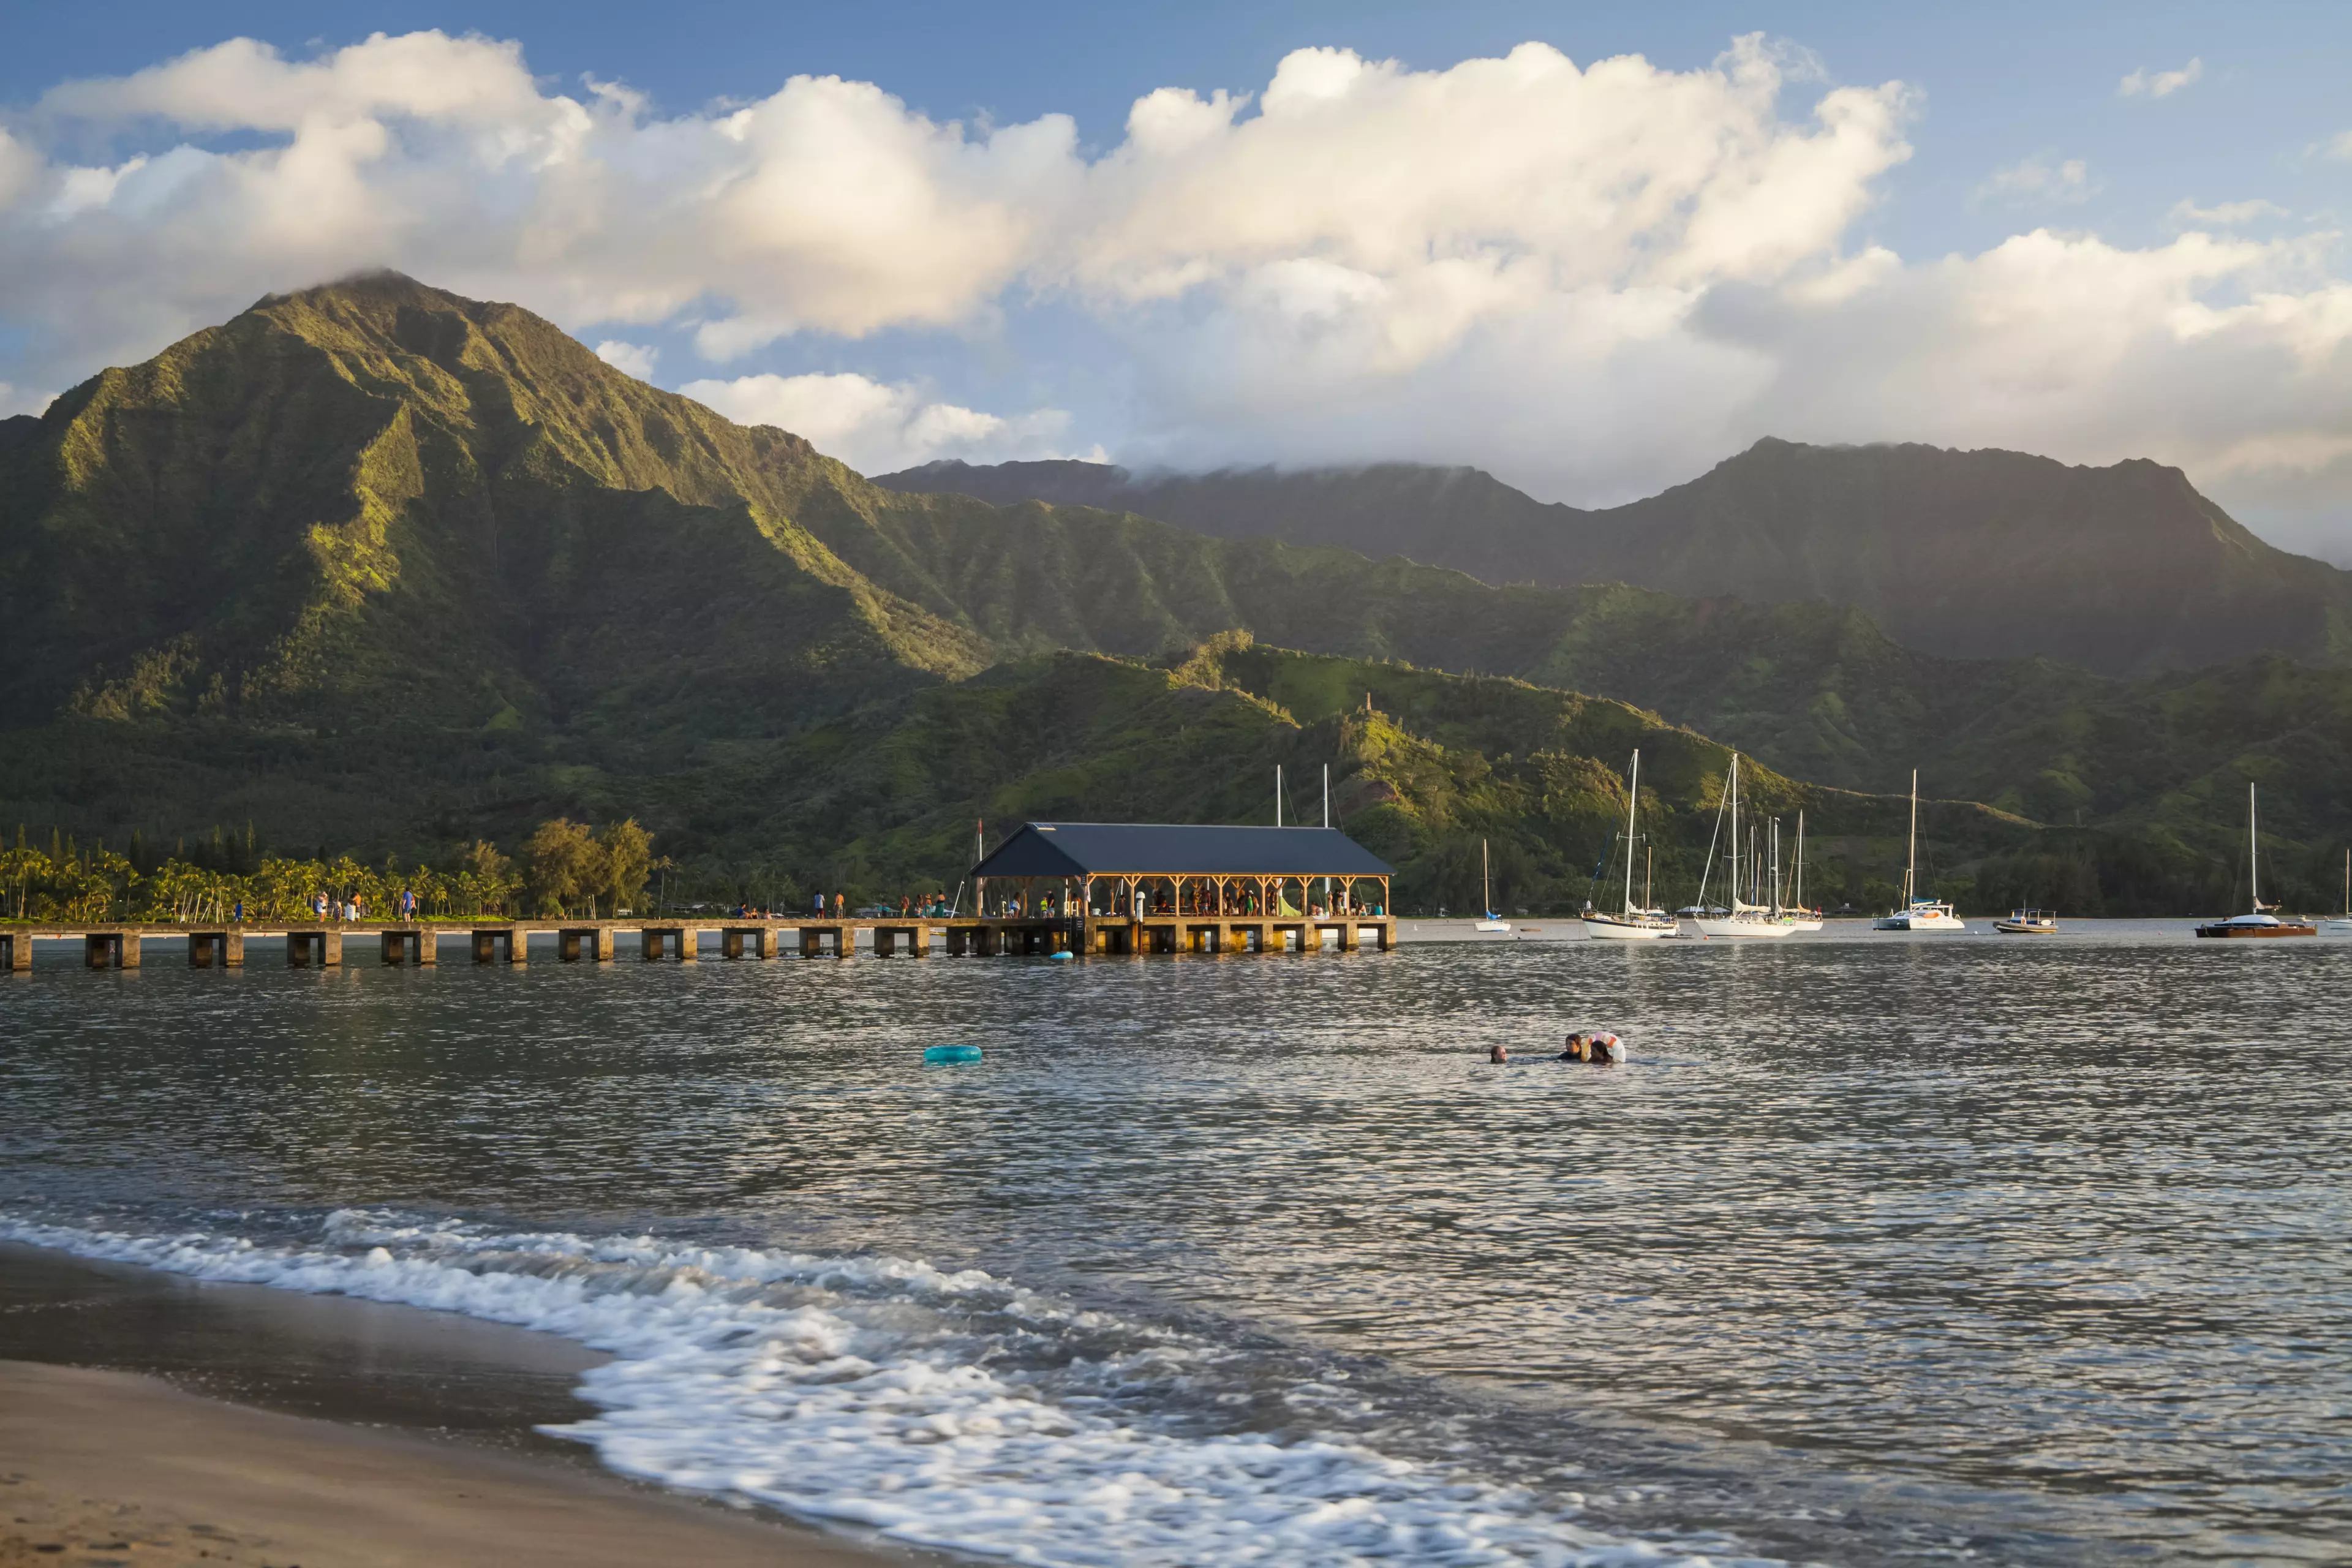 You'll stop at the beautiful island of Kauai, Hawaii.